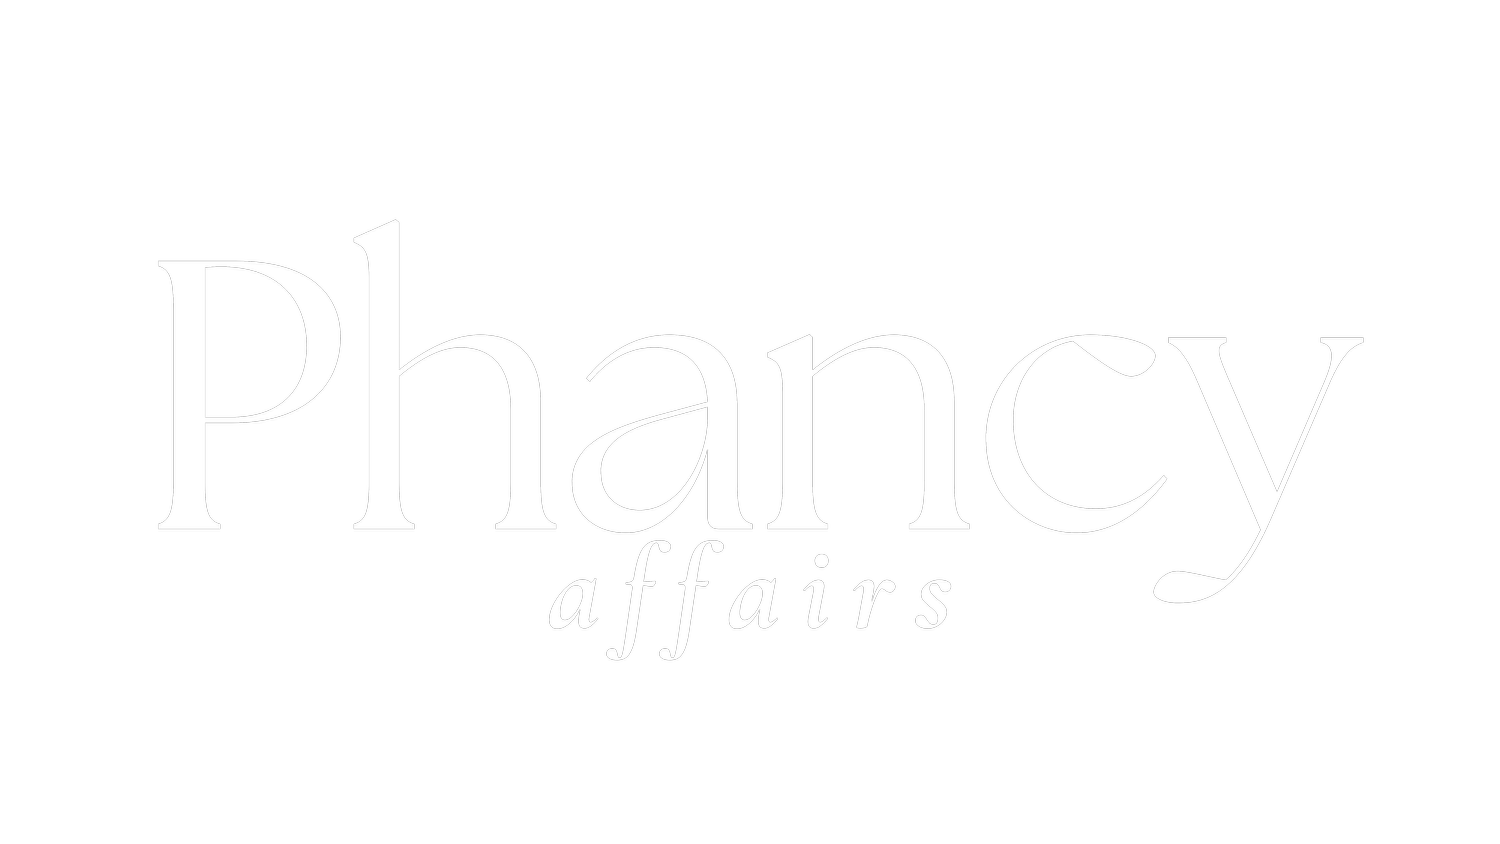 Phancy Affairs